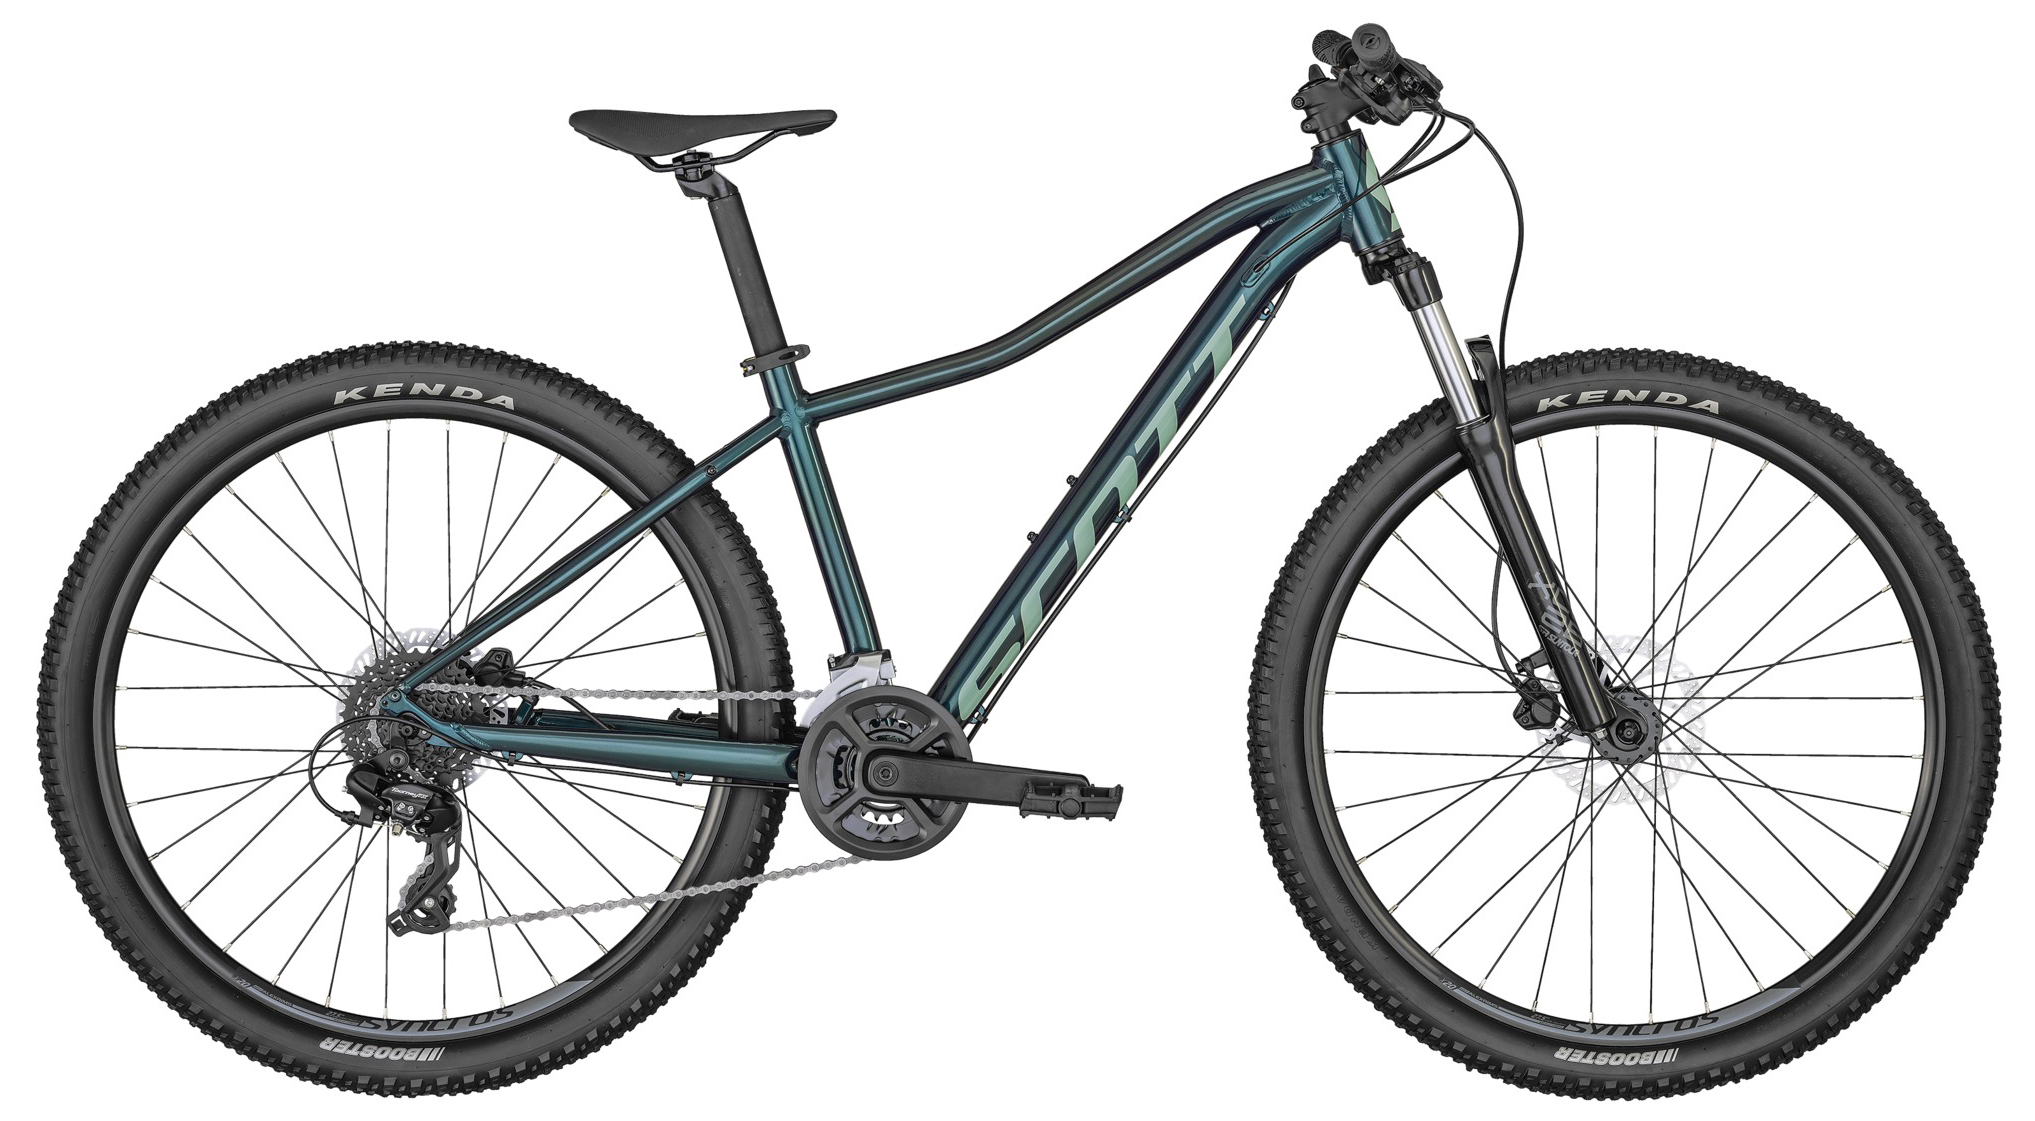  Отзывы о Горном велосипеде Scott Contessa Active 50 27.5 2020